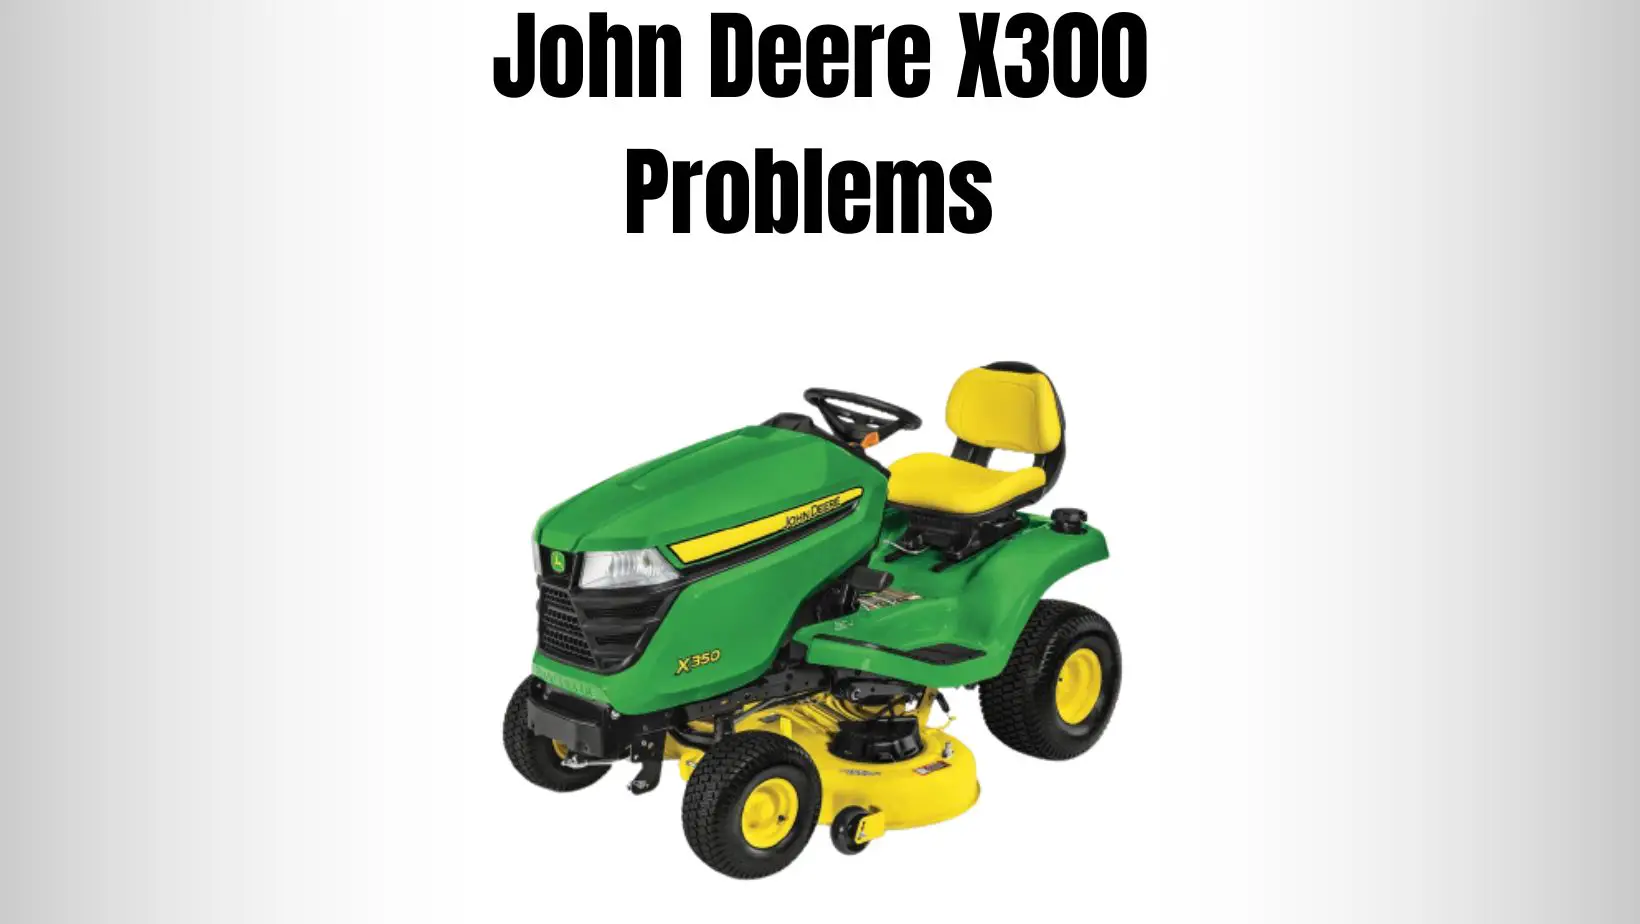 John Deere X300 Problems